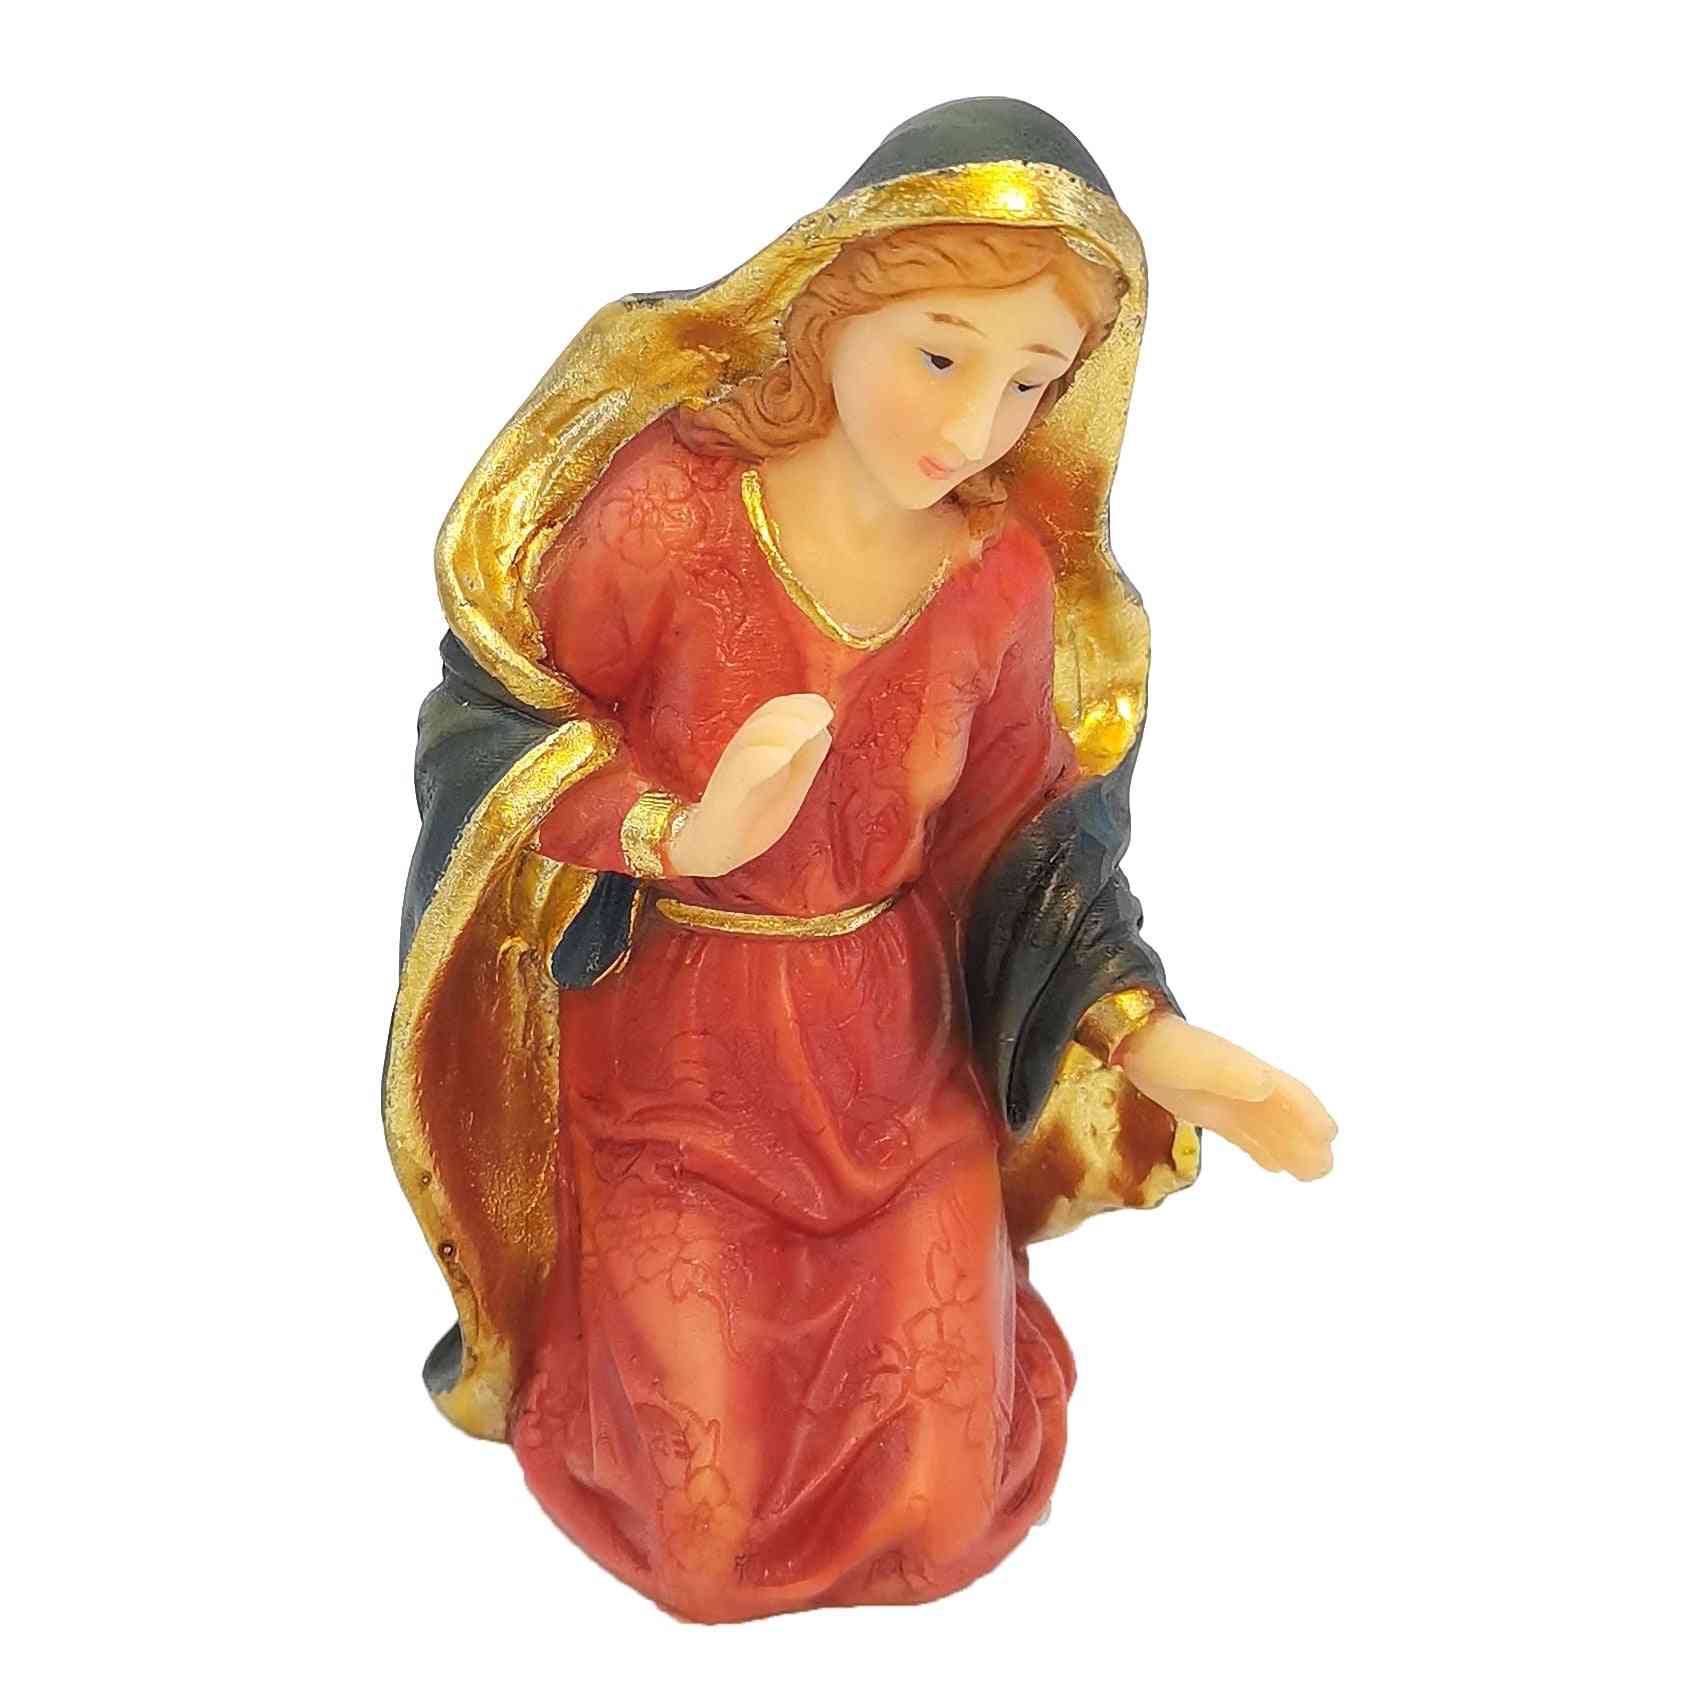 Зайтън статуя комплект за рождество Христово, фигурки бебе Исус, миниатюри за ясли, декорация за дома